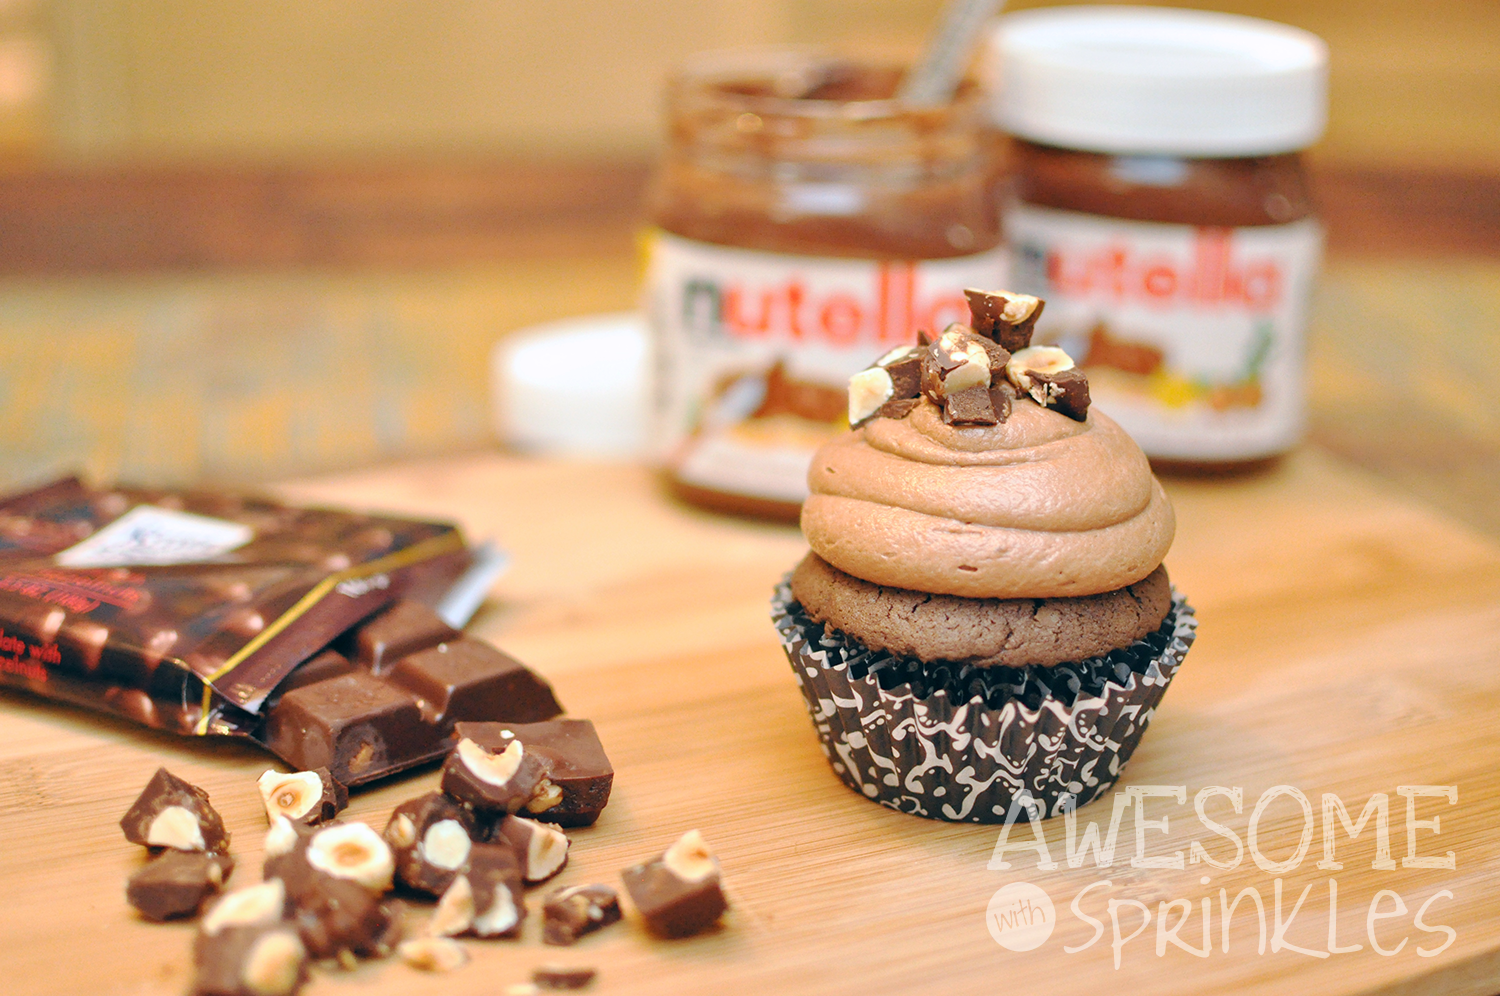 I Love Nutella Cupcakes | #awesomewithsprinkles